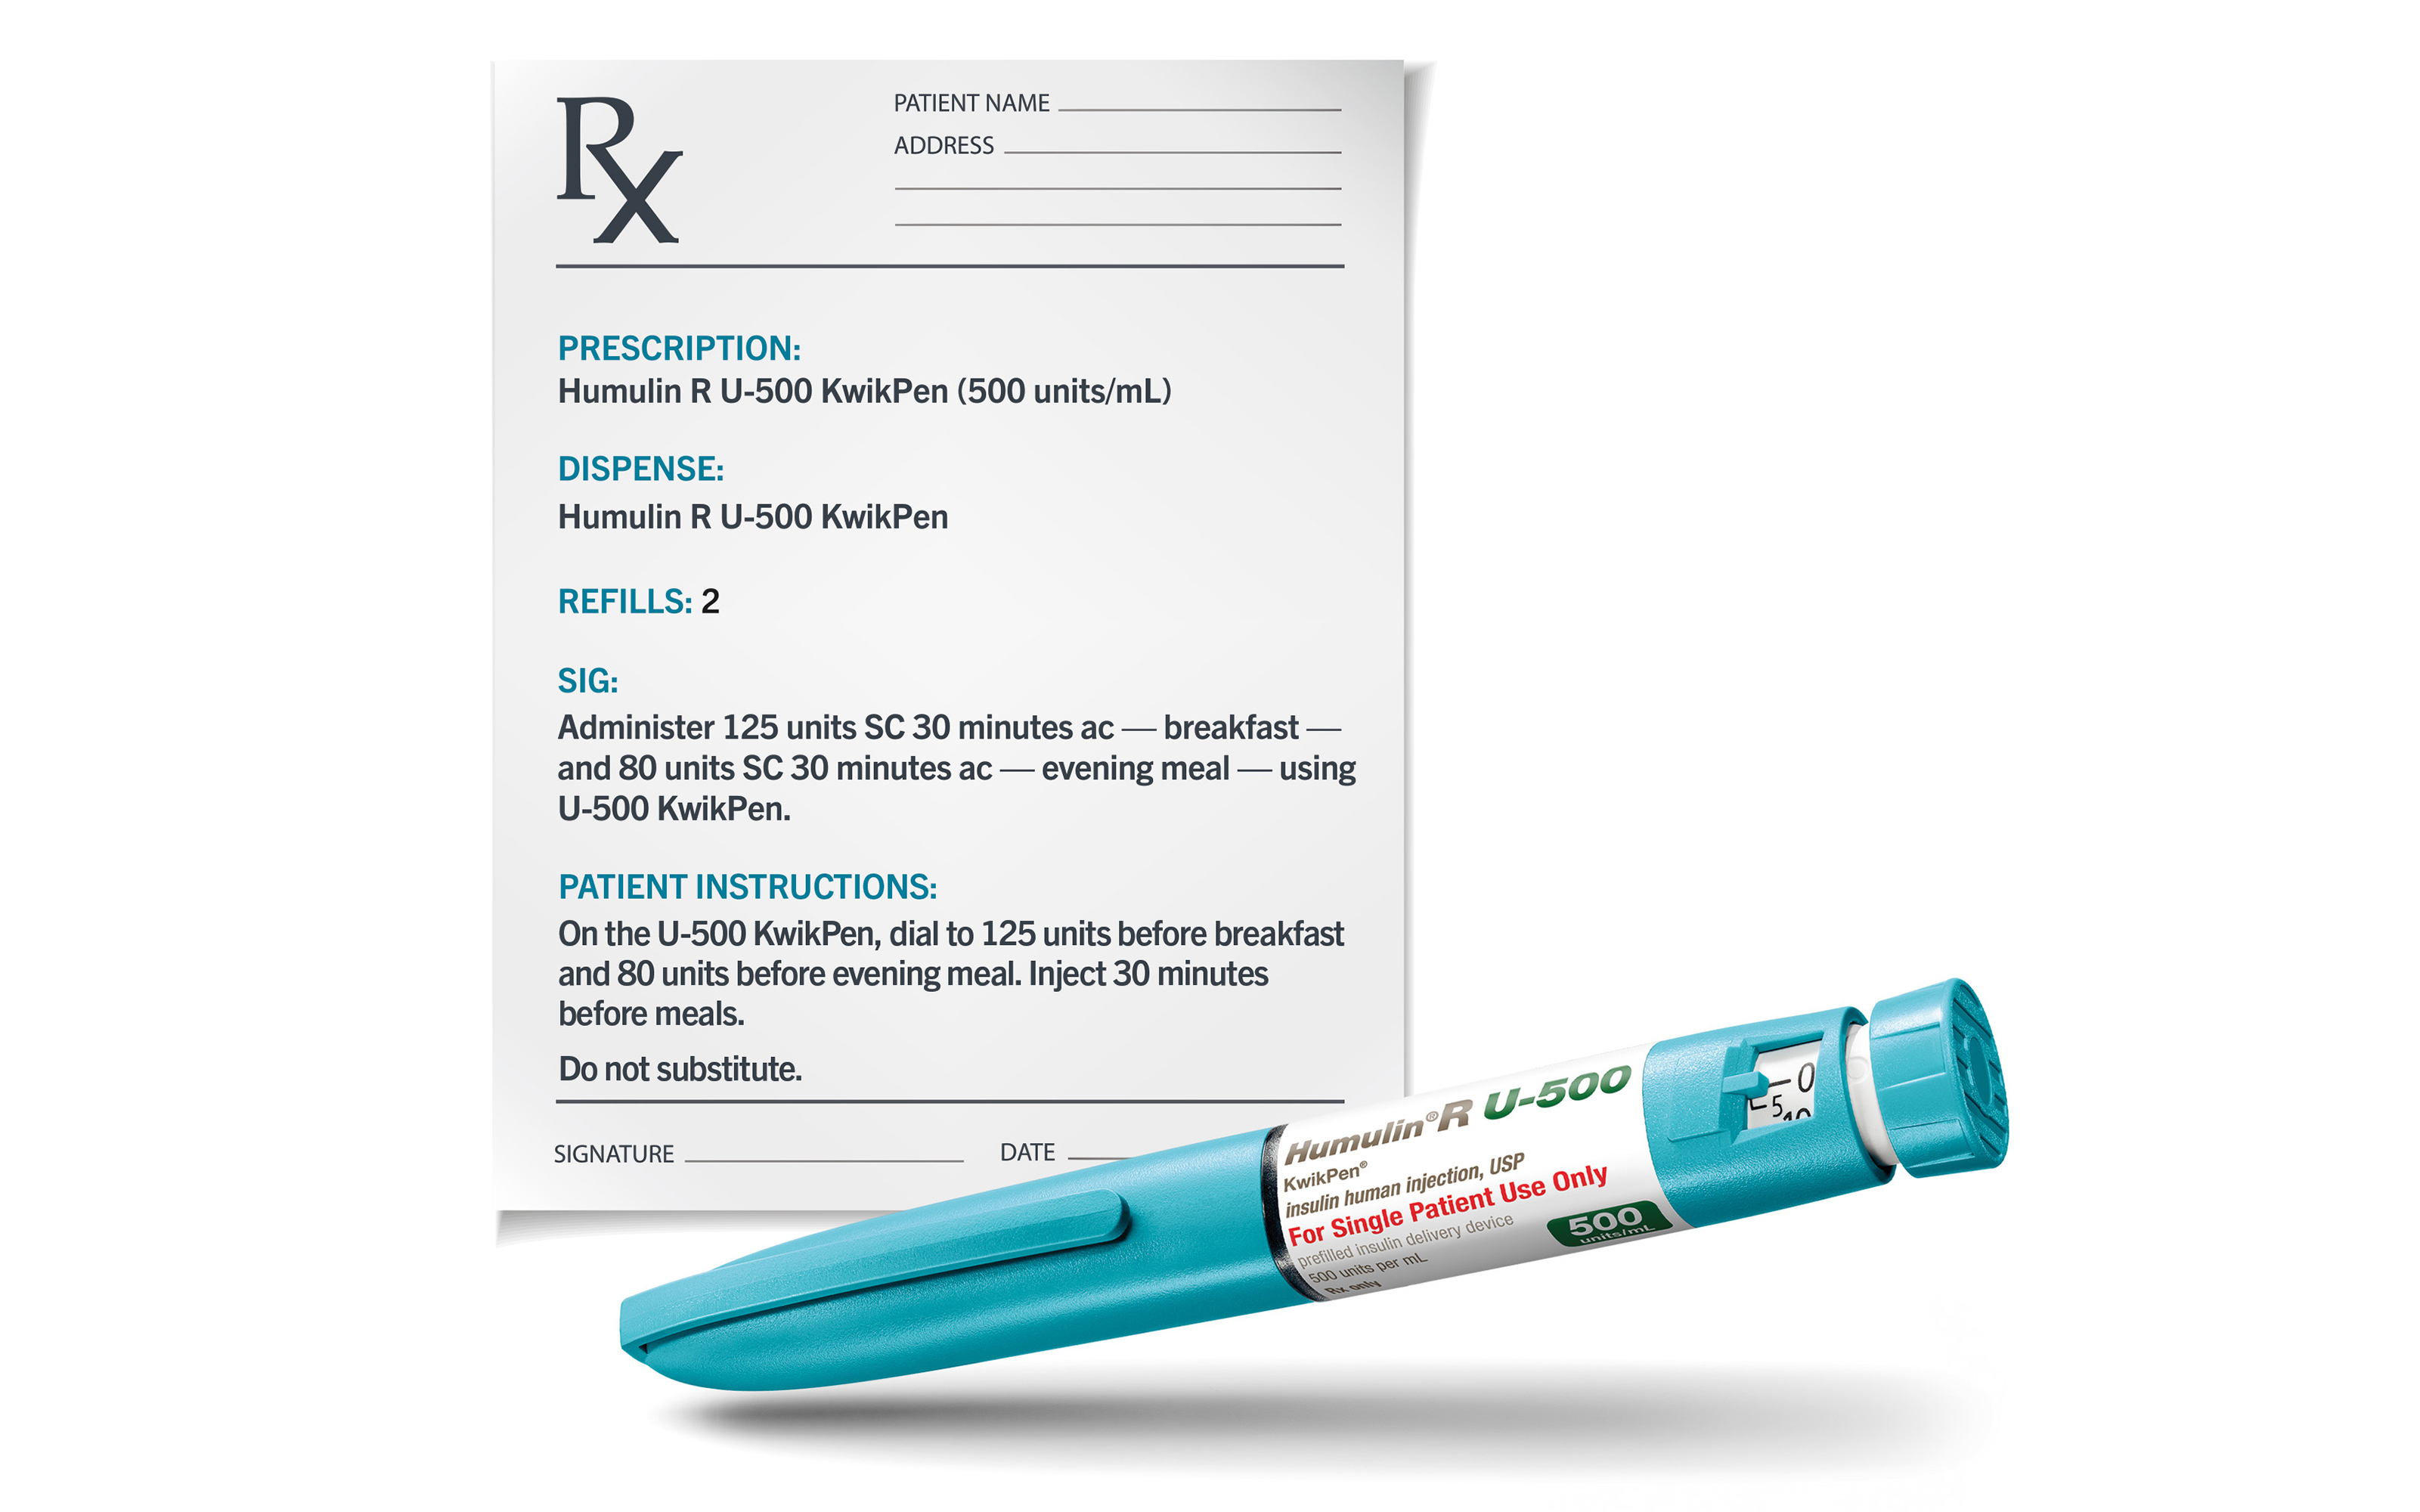 Humulin R U-500 prescription pad with injection pen